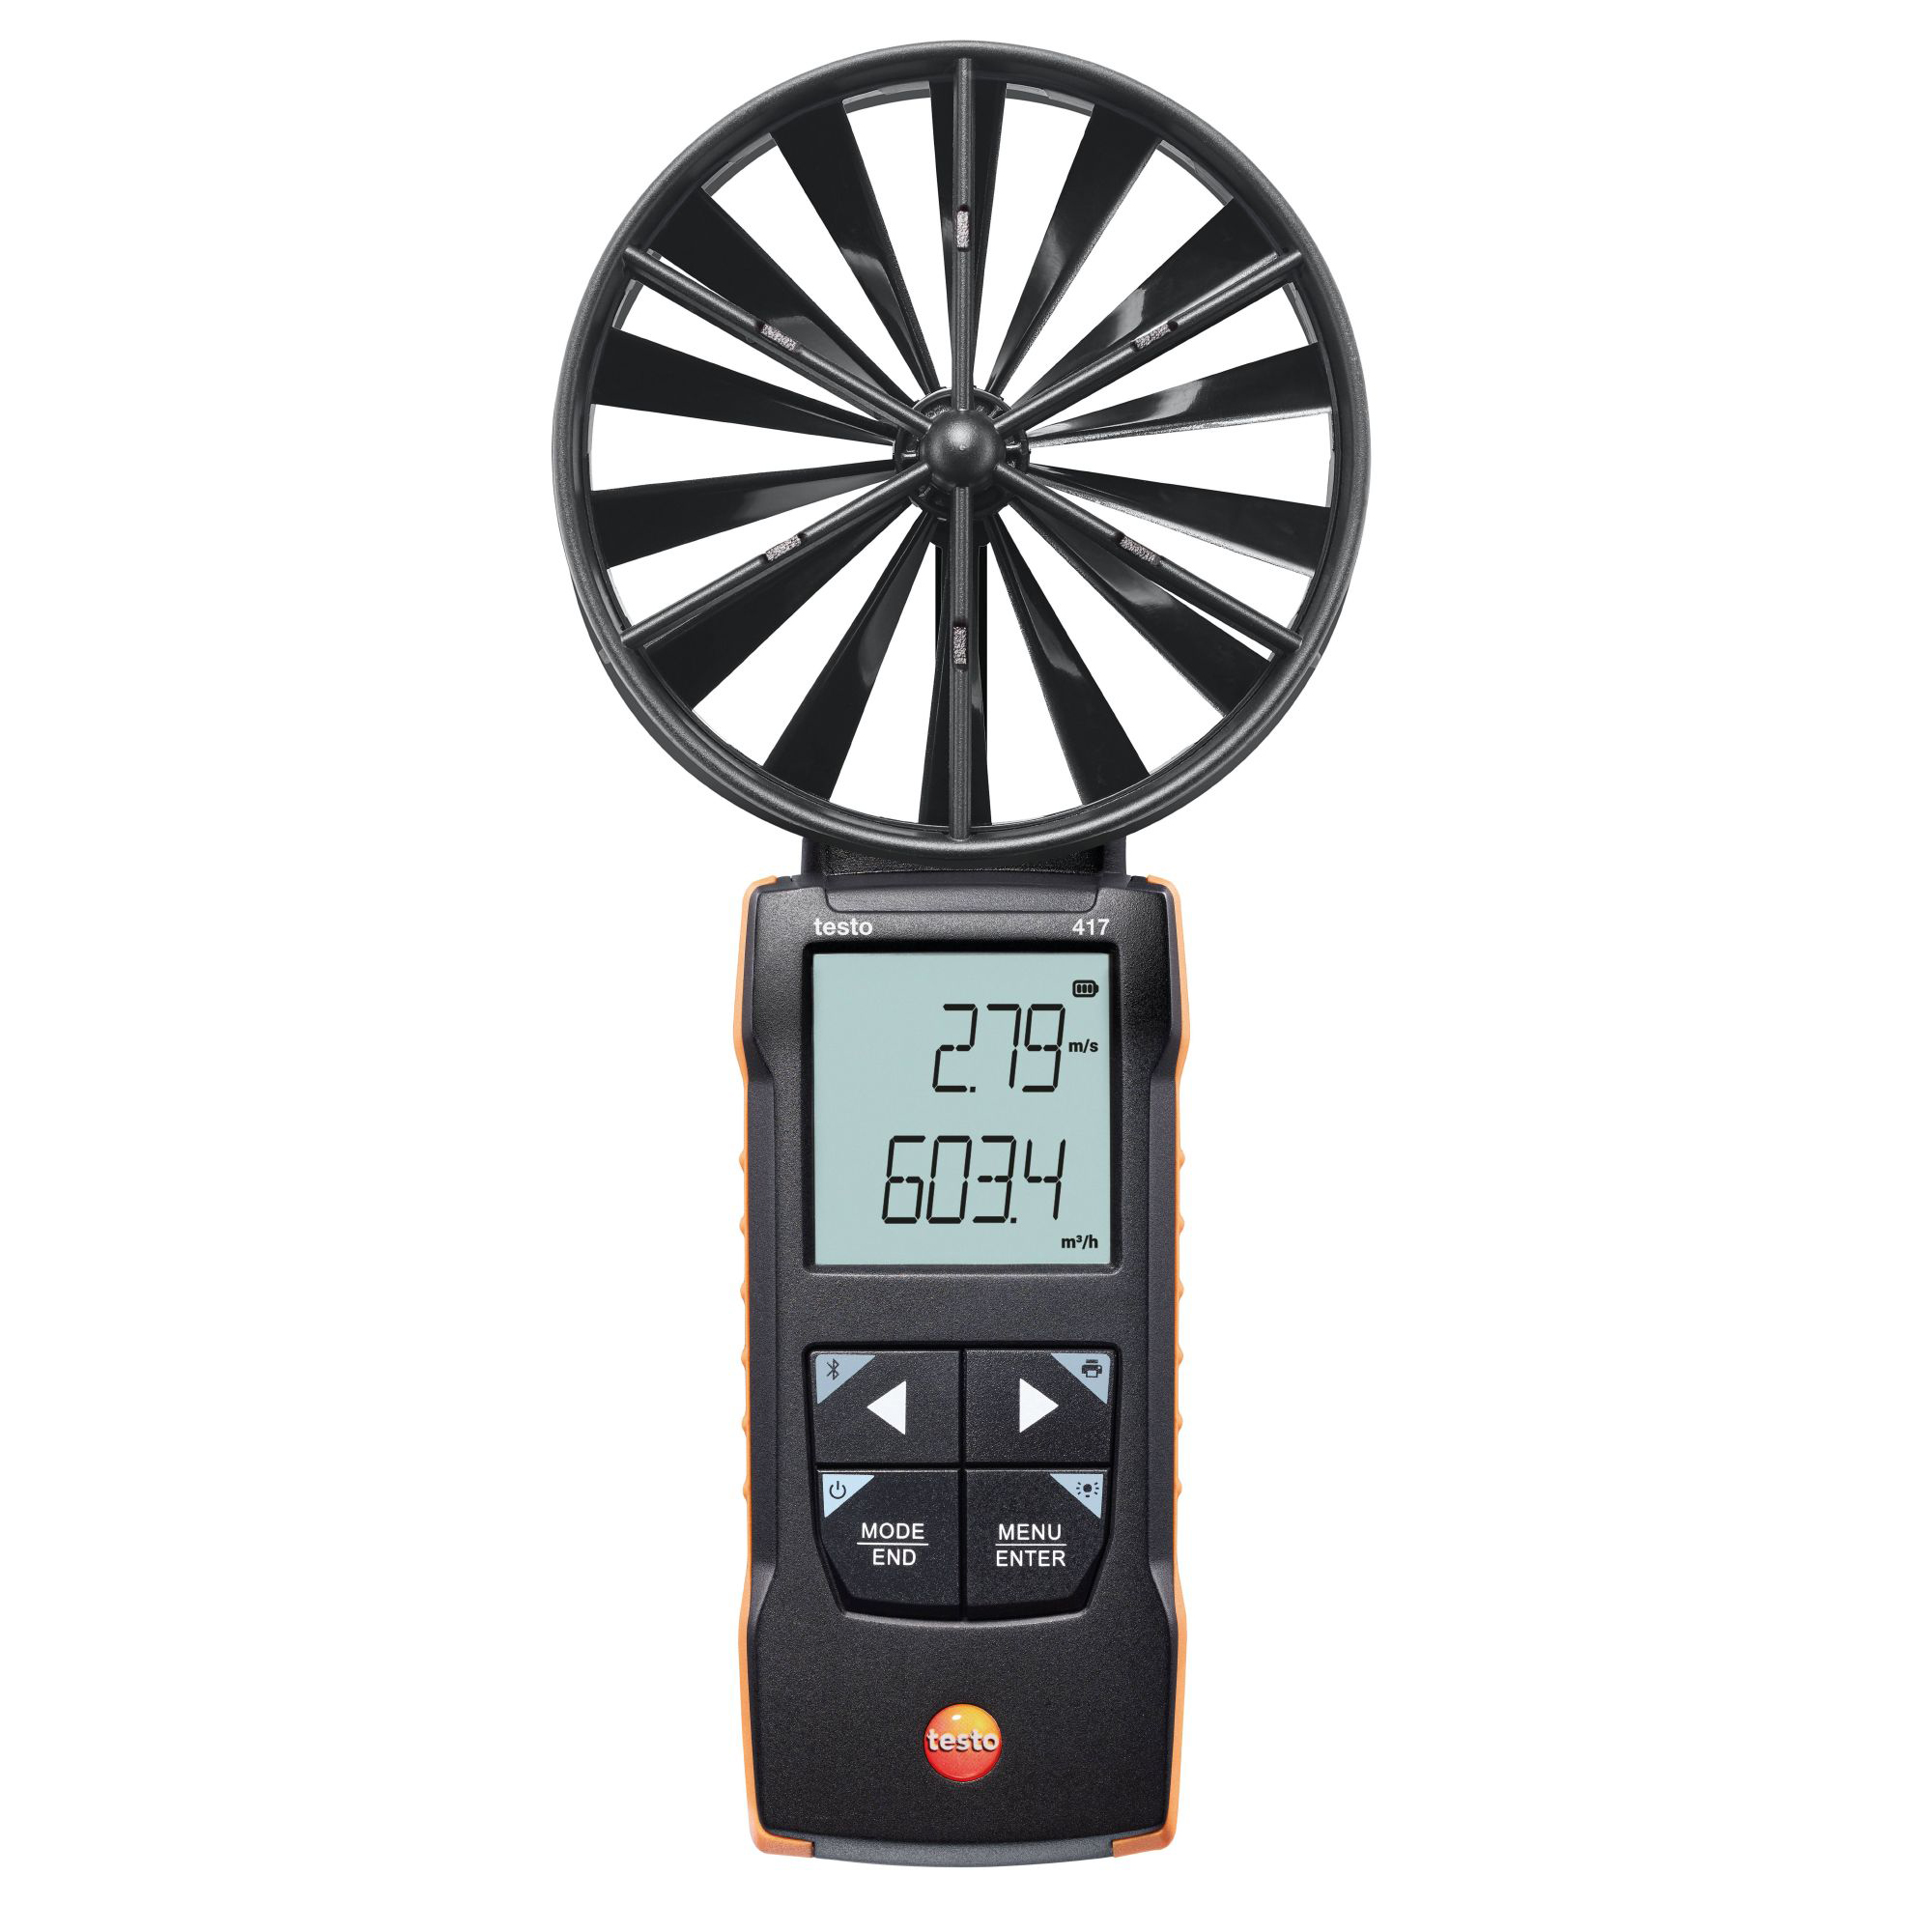 Testo 417 - Digitales 100mm-Flügelrad-Anemometer mit App-Anbindung - 0563 0417